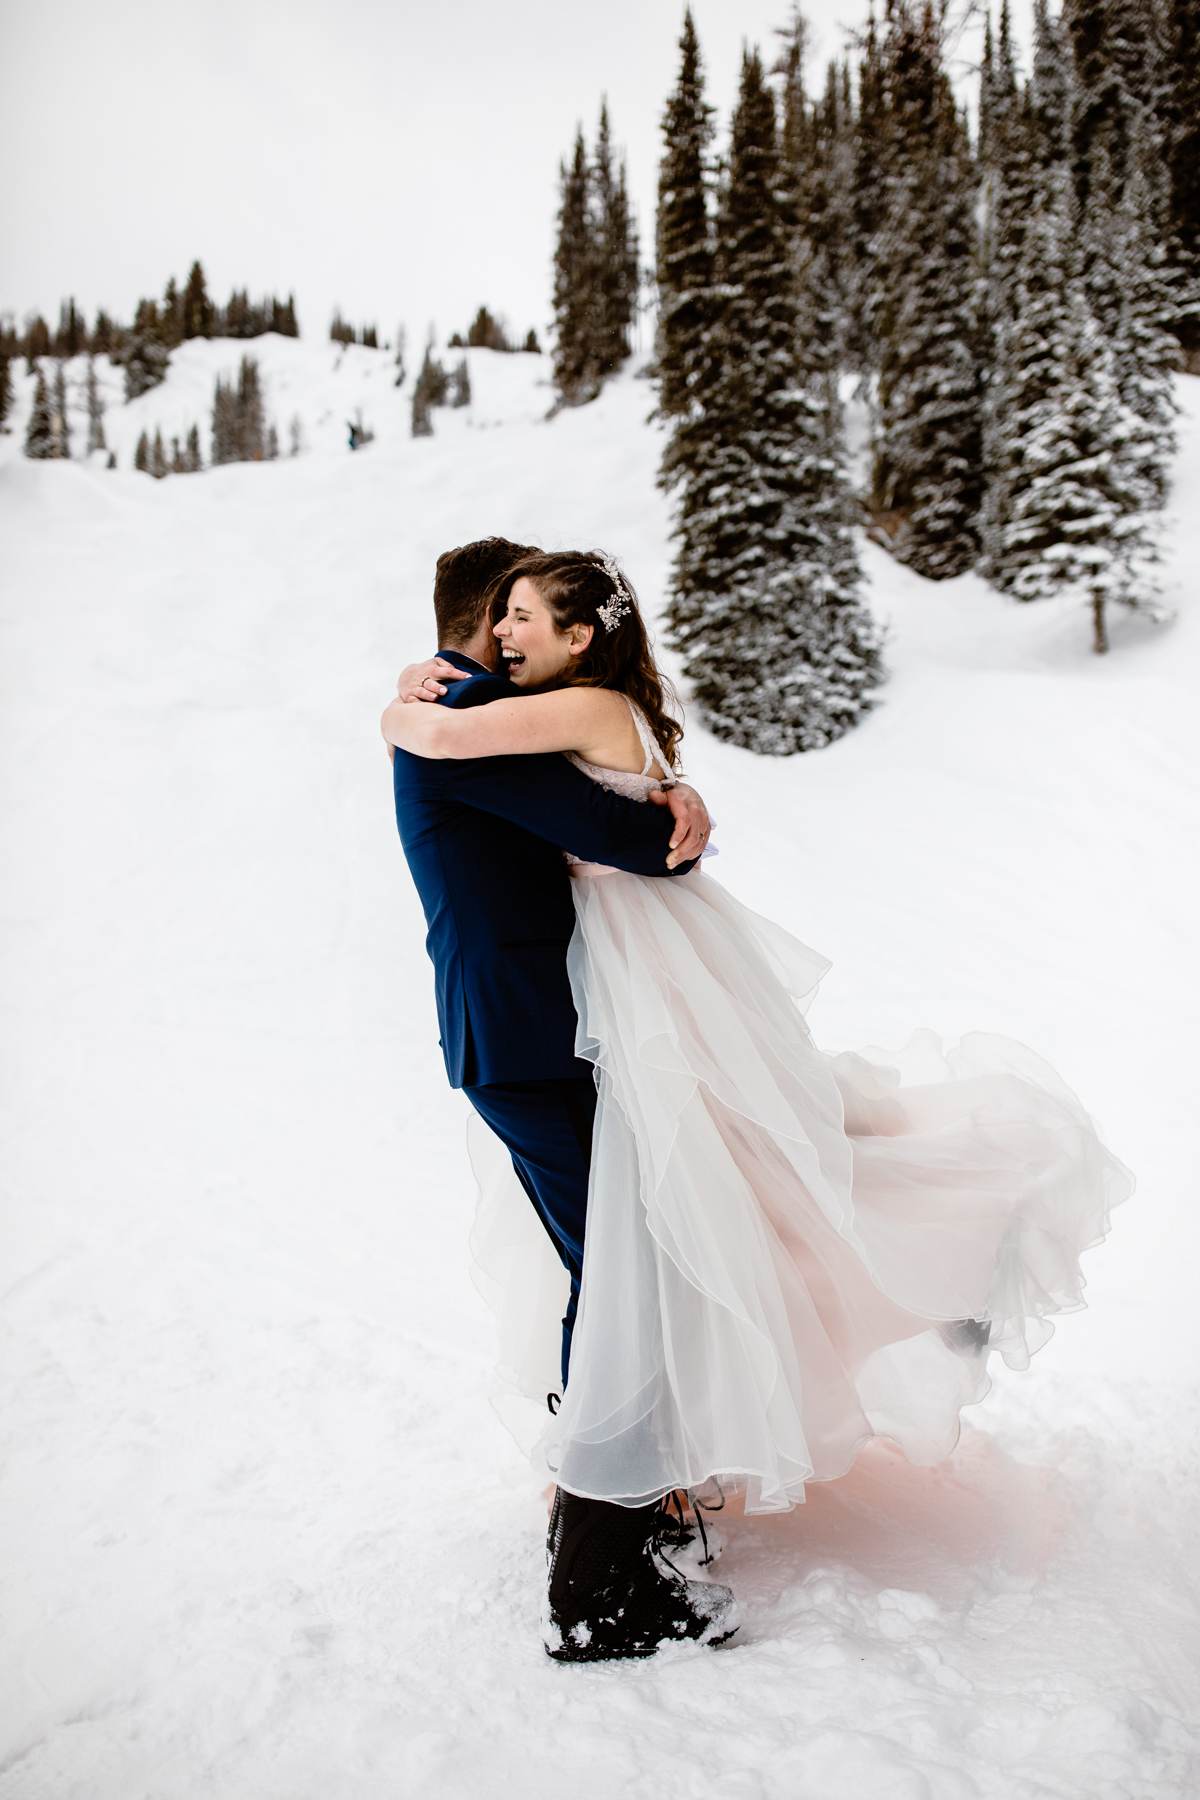 Ski Wedding Photos at Sunshine Village in Banff - Image 37